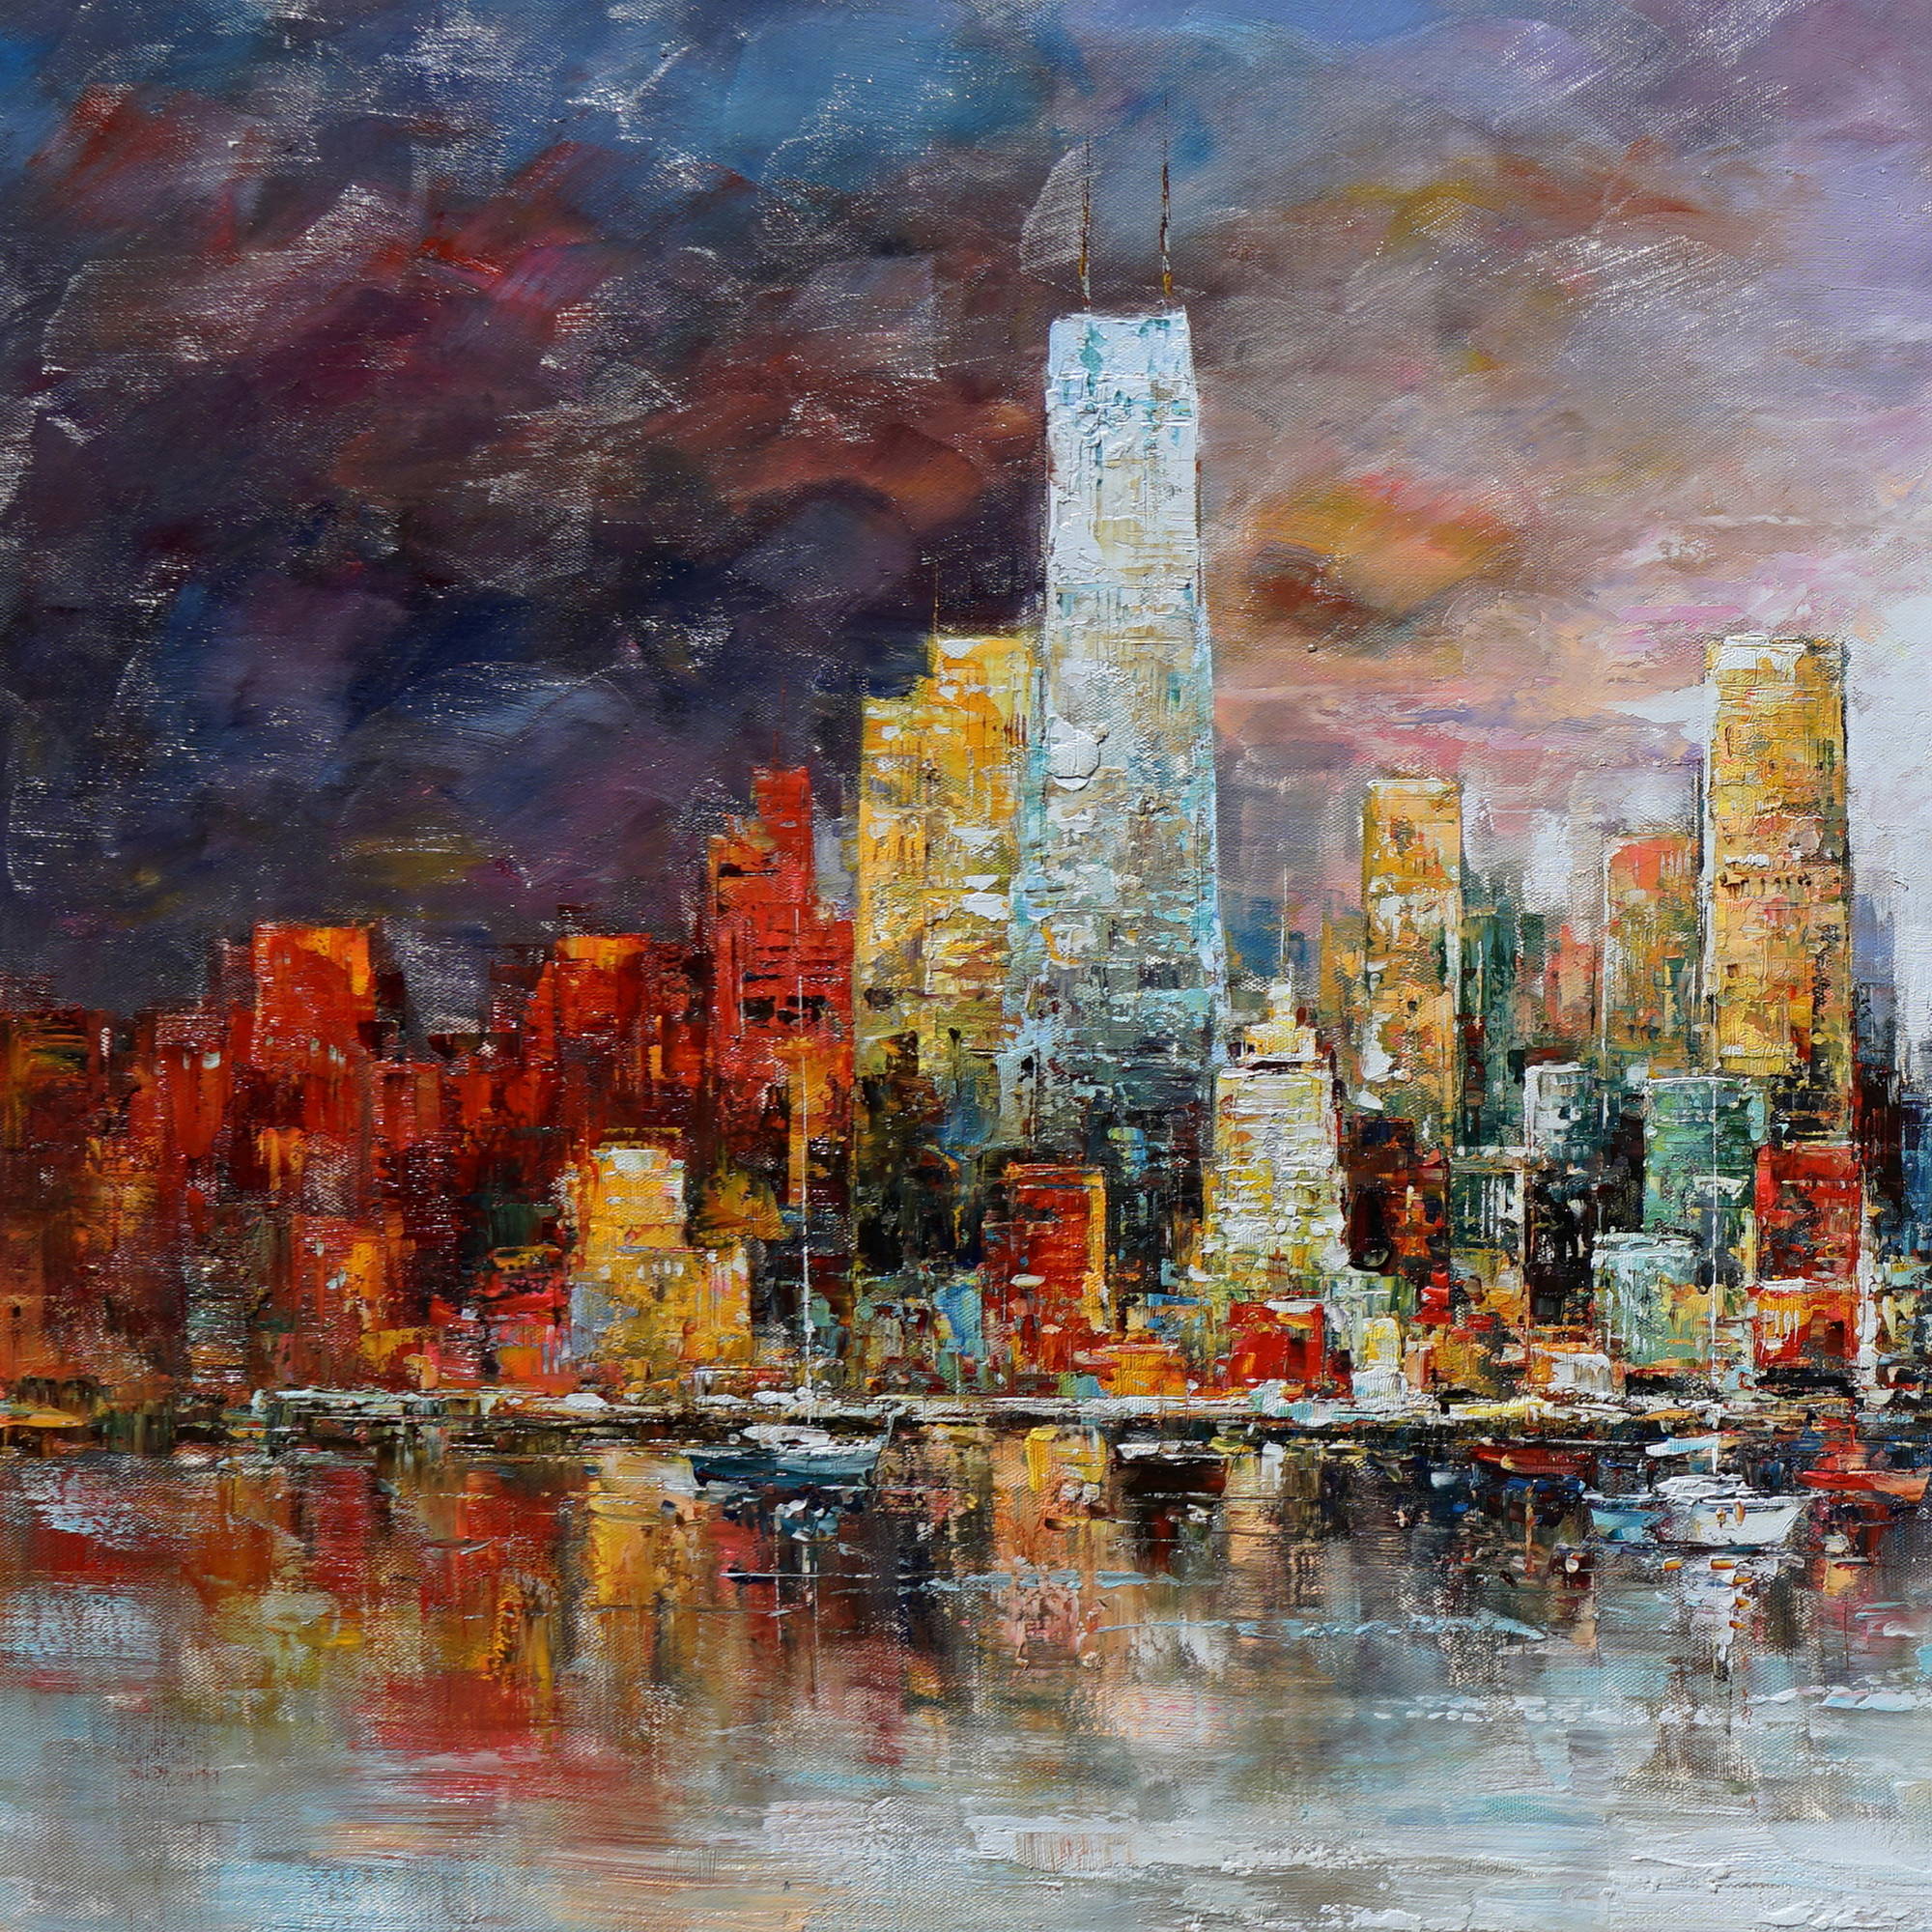 Hand painted Skyline New York 90x180cm